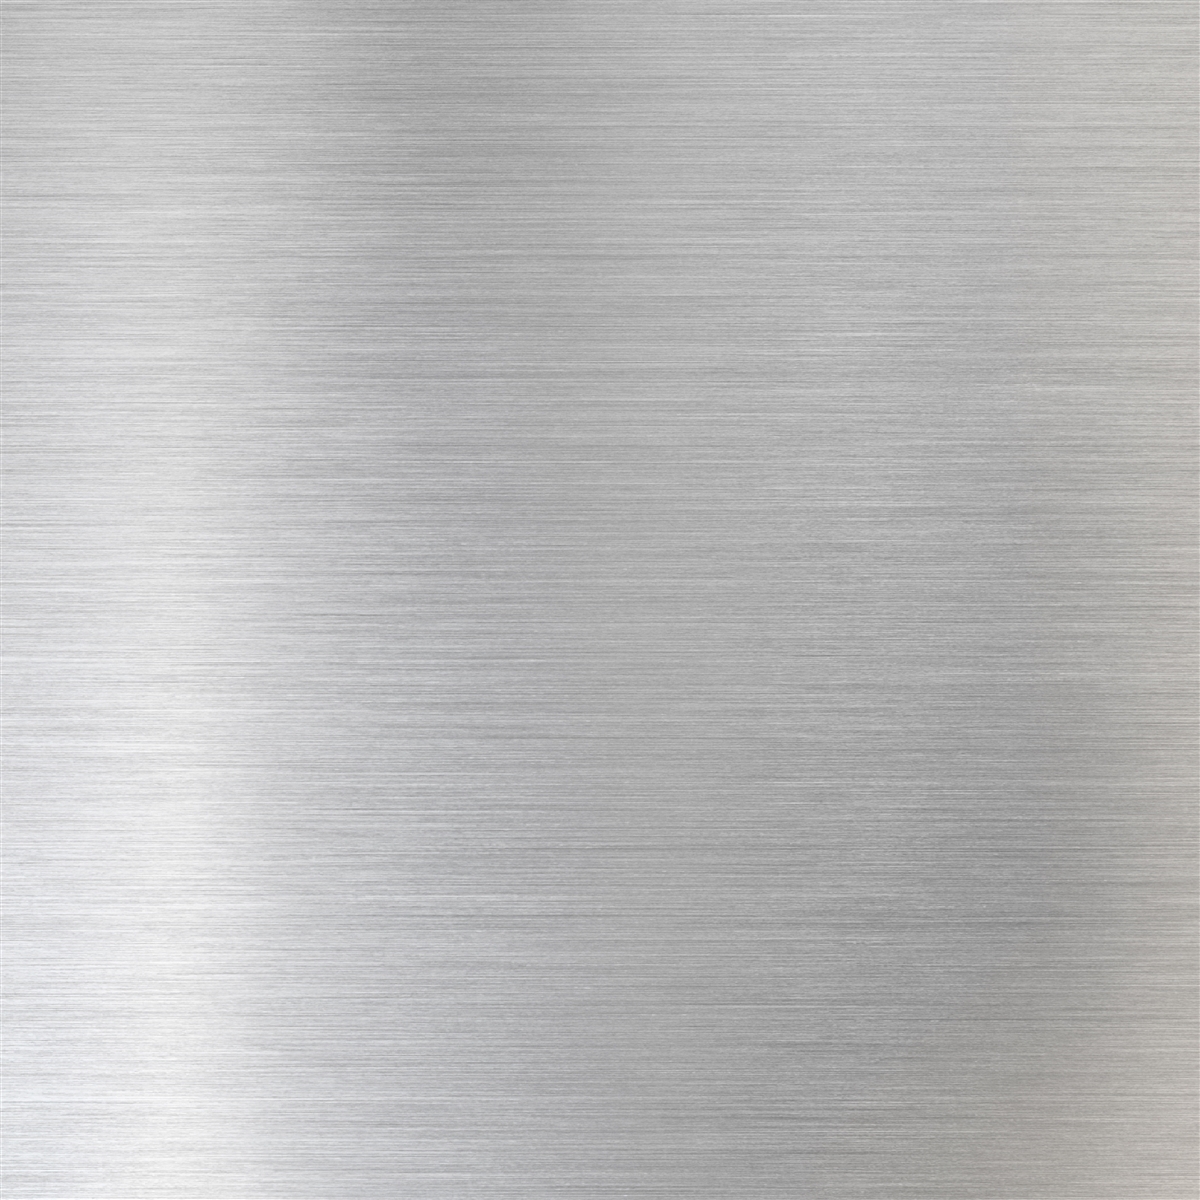 Brushed Clear Anodized Aluminum Sheet .040